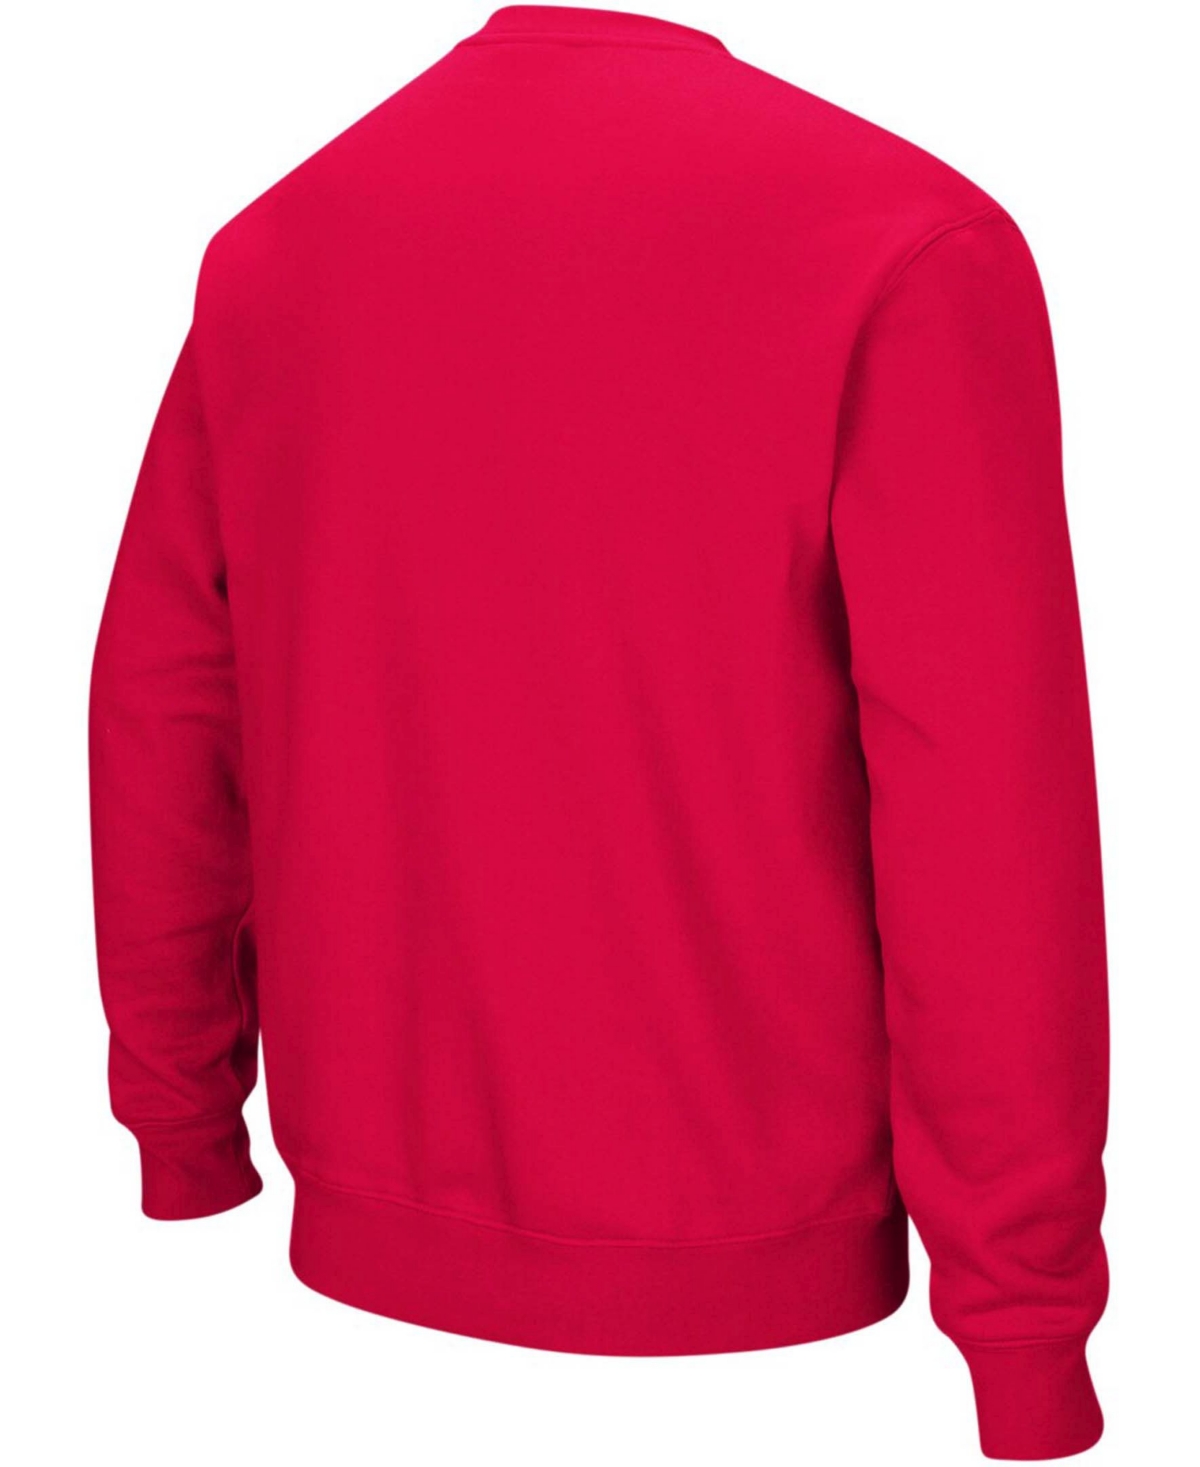 Shop Colosseum Men's Scarlet Nebraska Huskers Arch Logo Crew Neck Sweatshirt